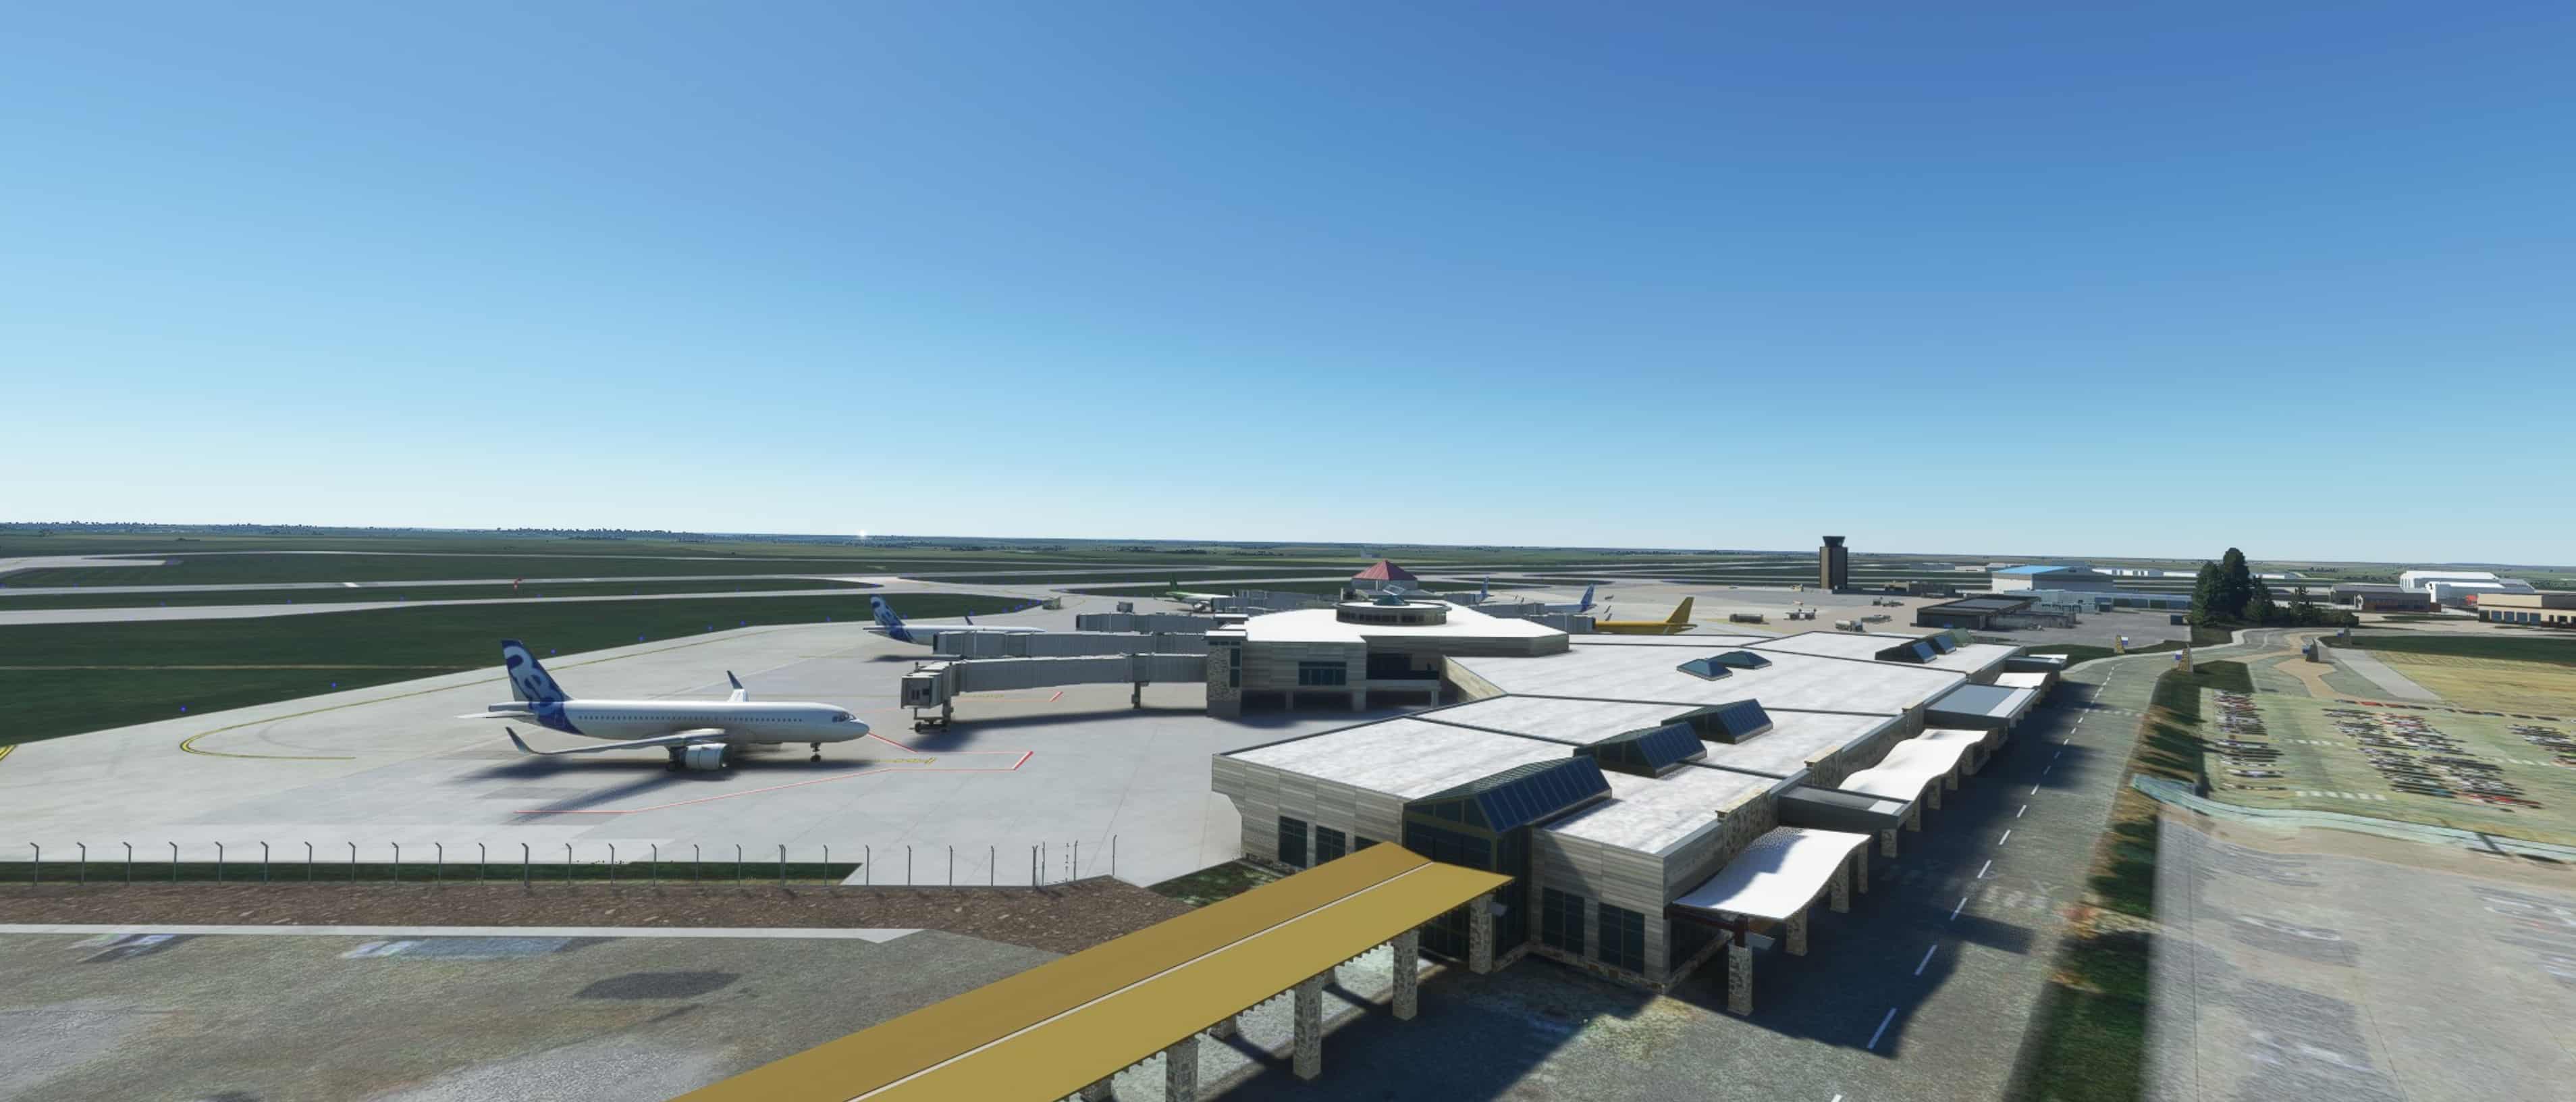 KCID - The Eastern Iowa Airport (5) - Flight Simulator Addon / Mod